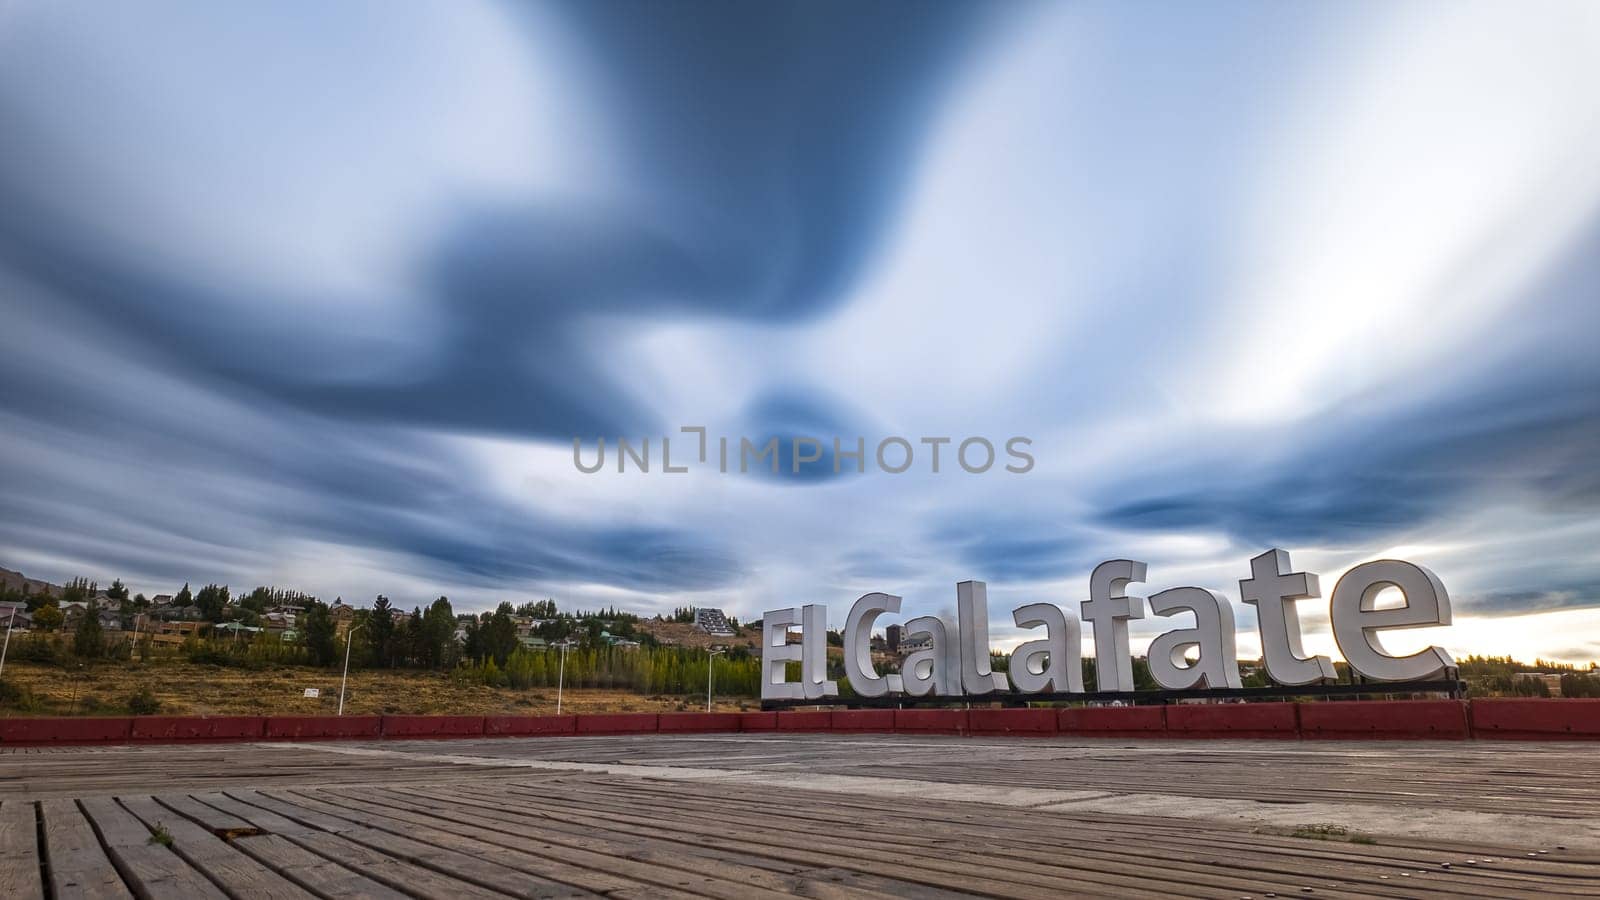 Dramatic Skies over El Calafate Sign in Patagonia, Argentina by FerradalFCG